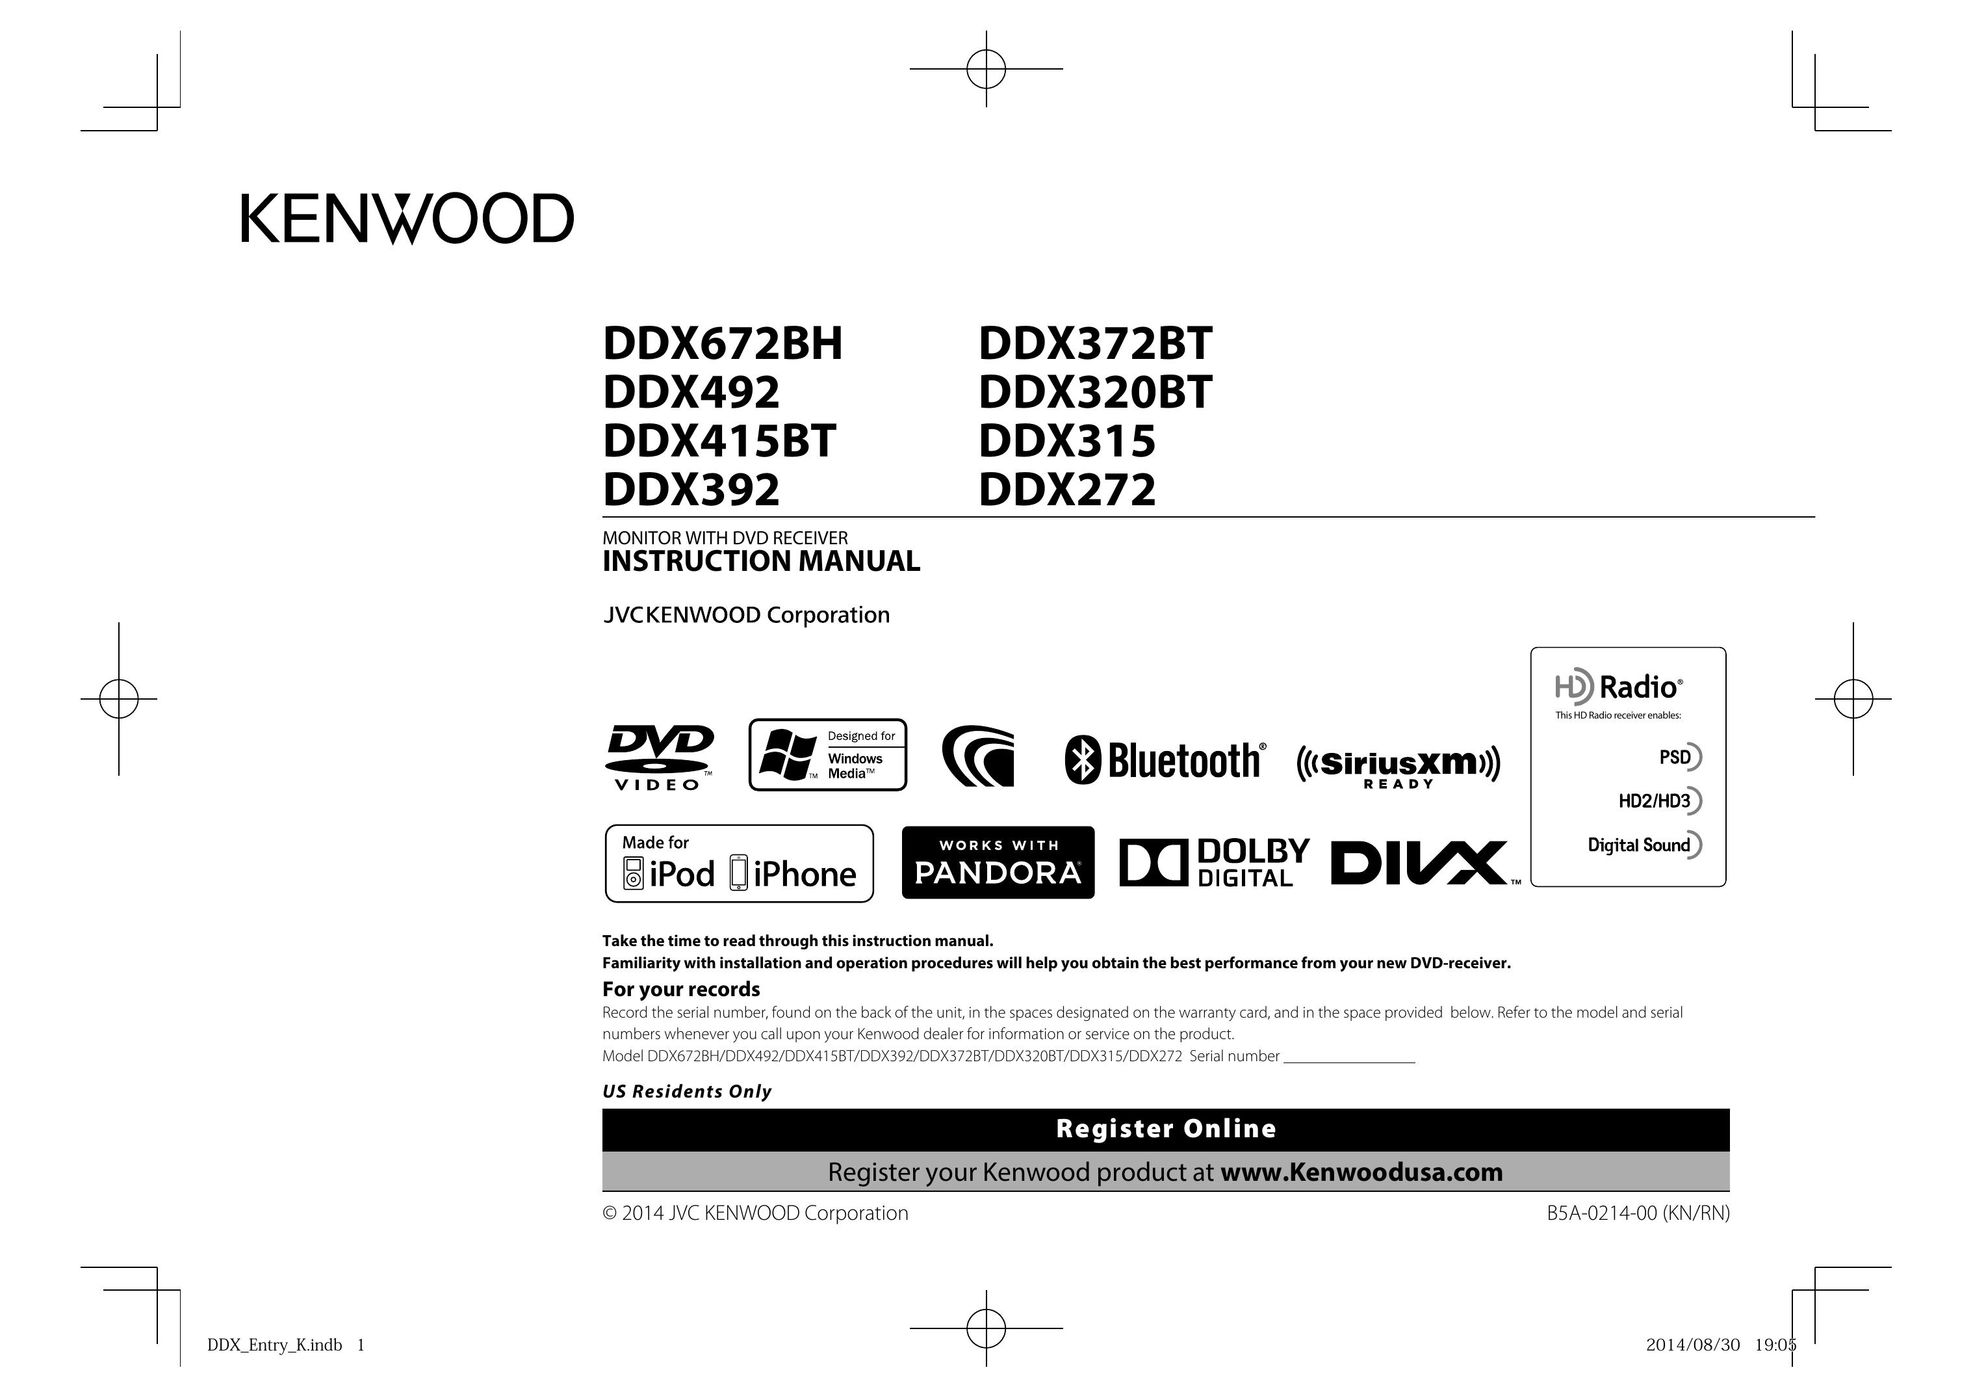 Kenwood DDX492 Car Video System User Manual